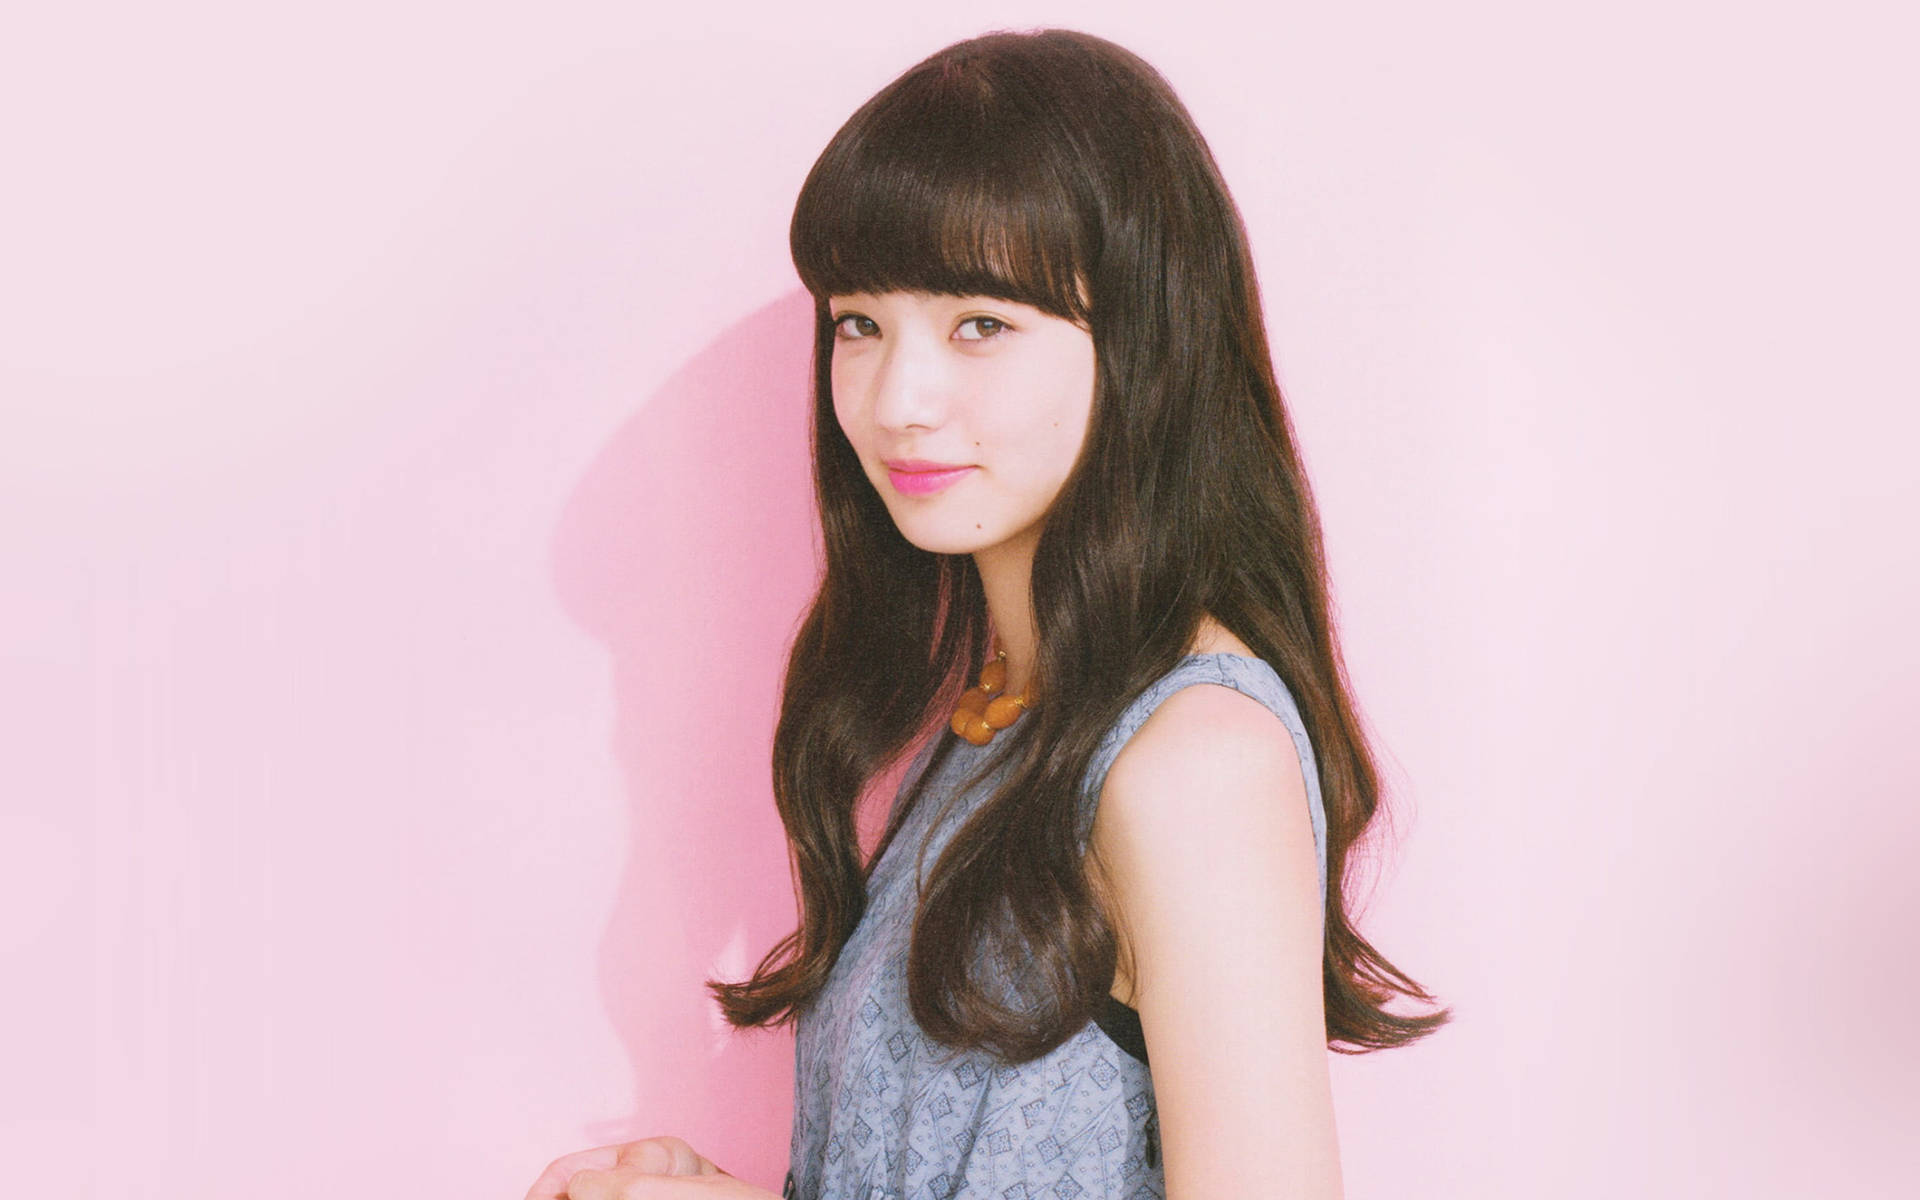 Cute Japanese Girl With Wavy Hair Wallpaper